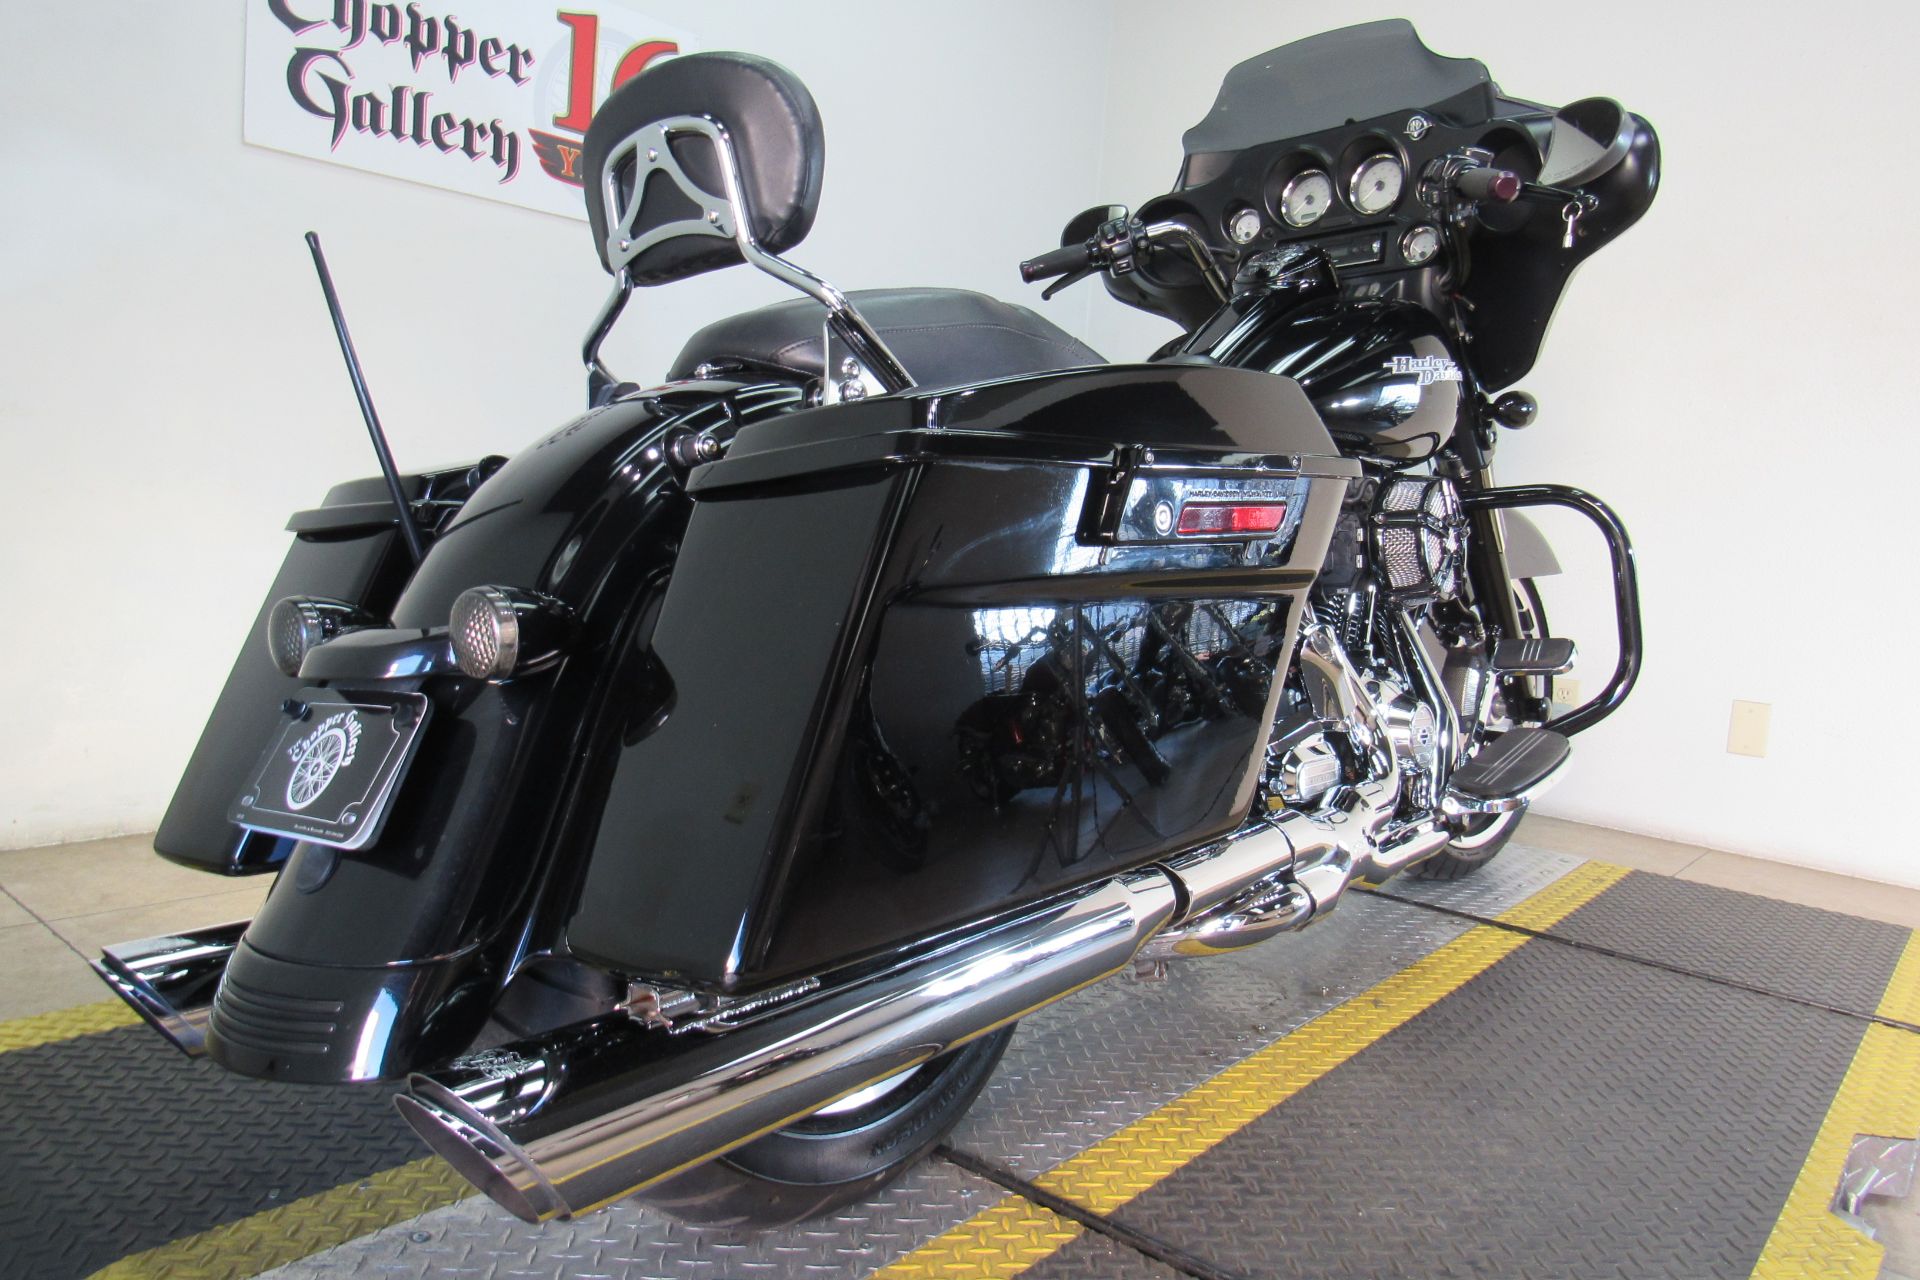 2013 Harley-Davidson Street Glide® in Temecula, California - Photo 34